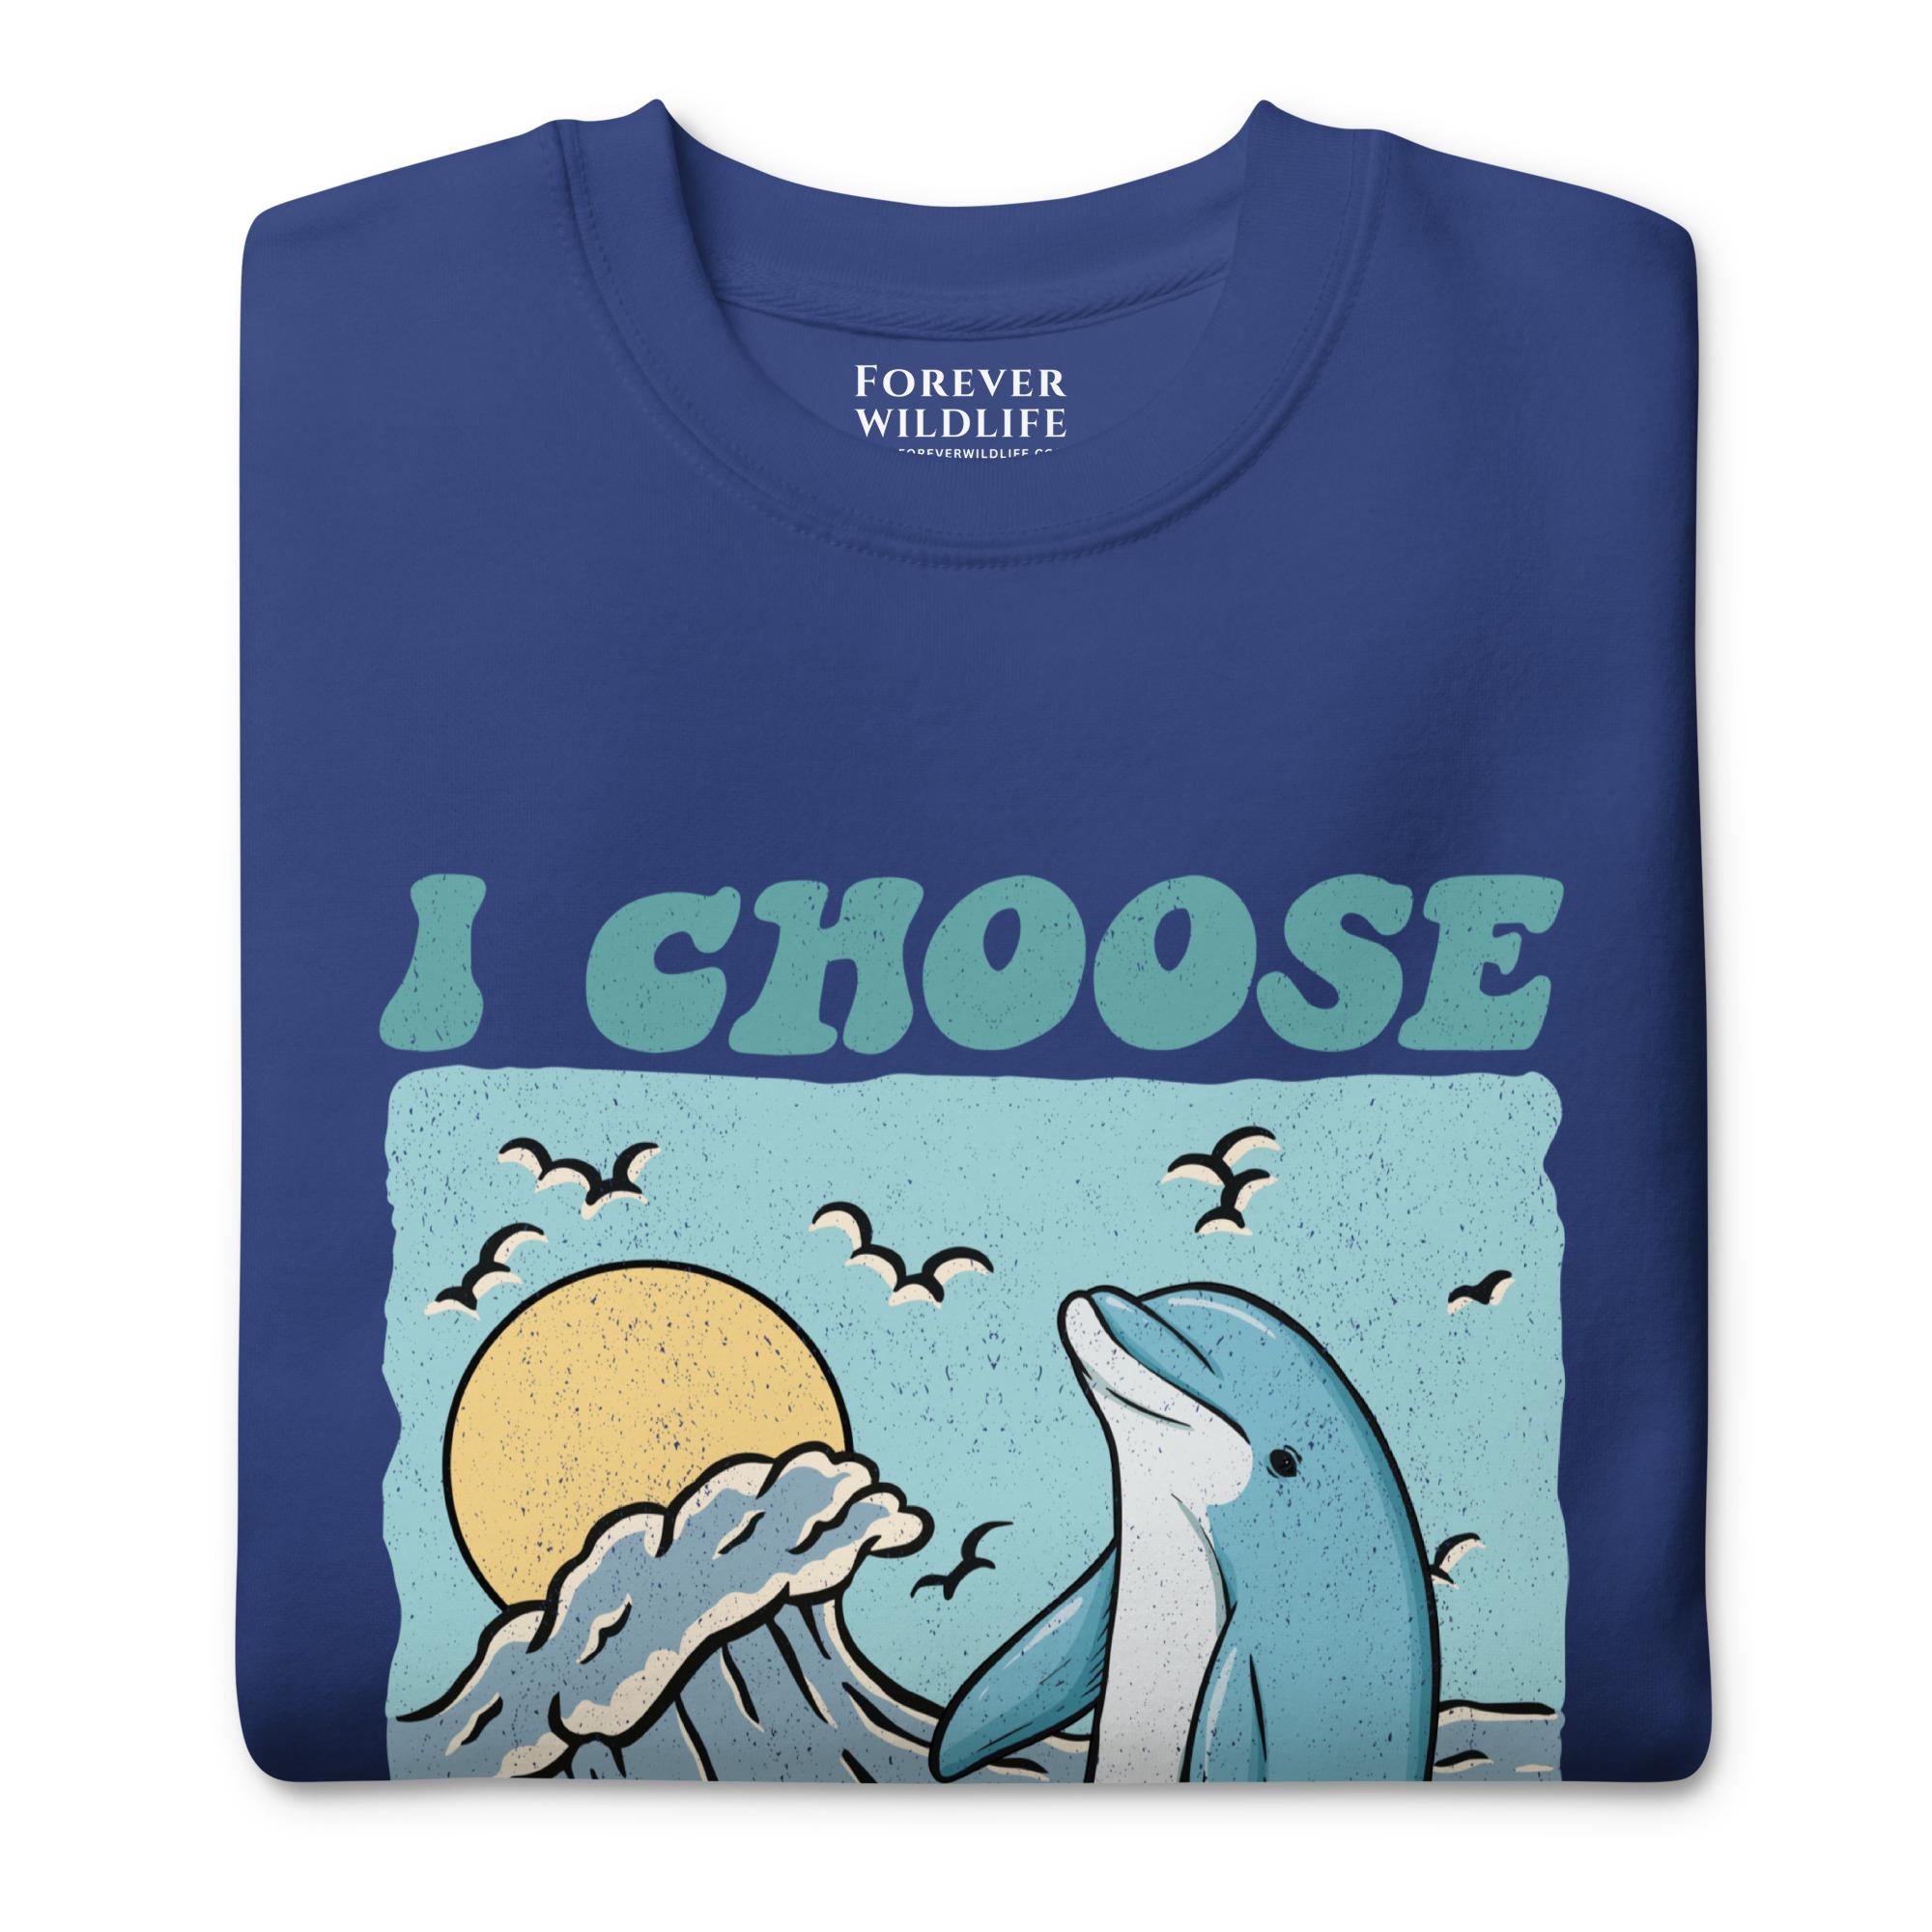 Dolphin Sweatshirt in Royal-Premium Wildlife Animal Inspiration Sweatshirt Design with 'I Choose Happiness' text, part of Wildlife Sweatshirts & Clothing from Forever Wildlife.